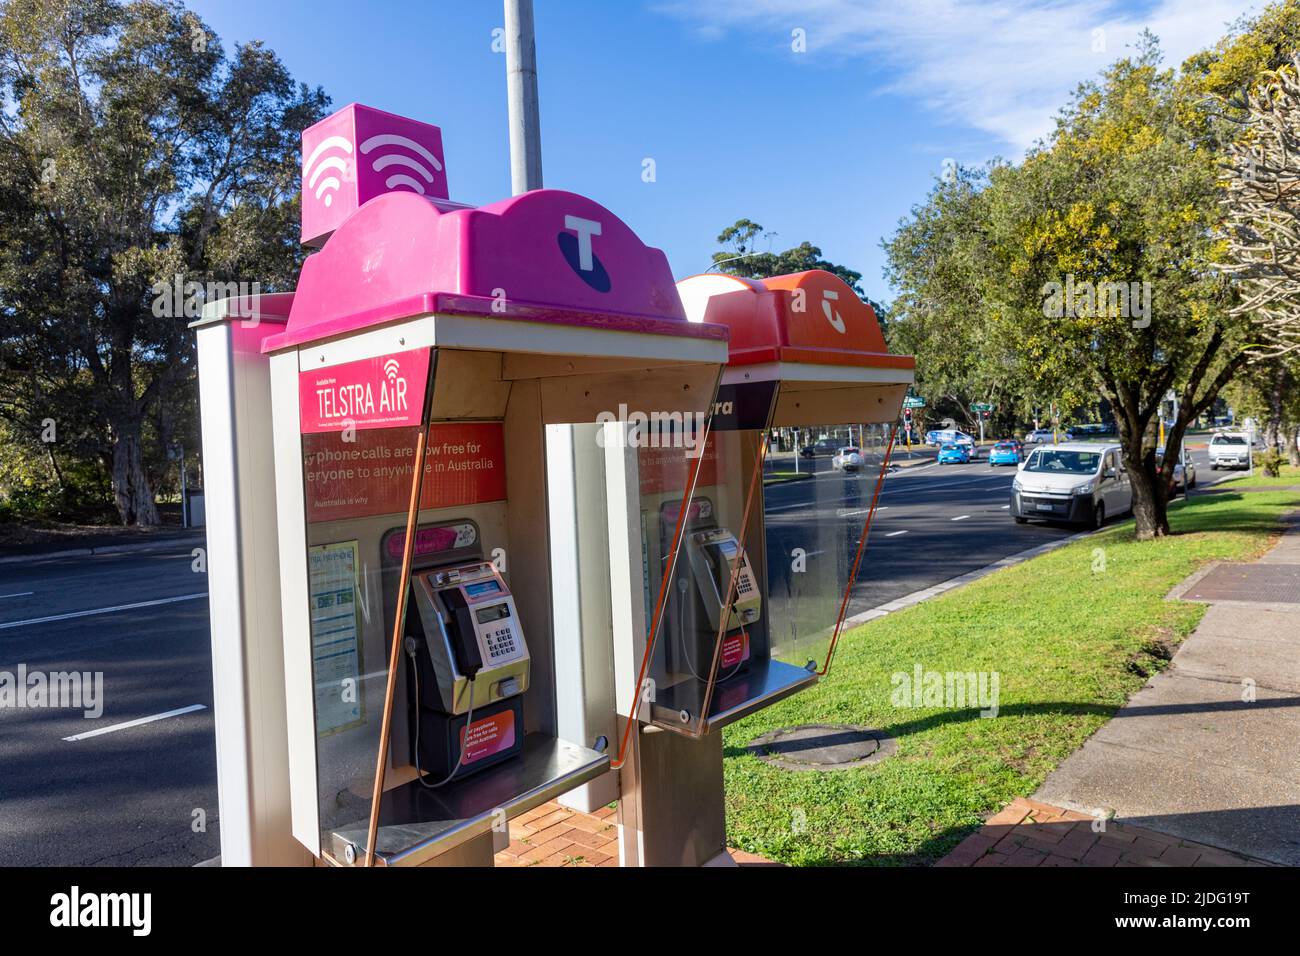 Telstra public pay phones now allow free landline calls across Australia, Mona Vale Sydney,NSW,Australia Stock Photo